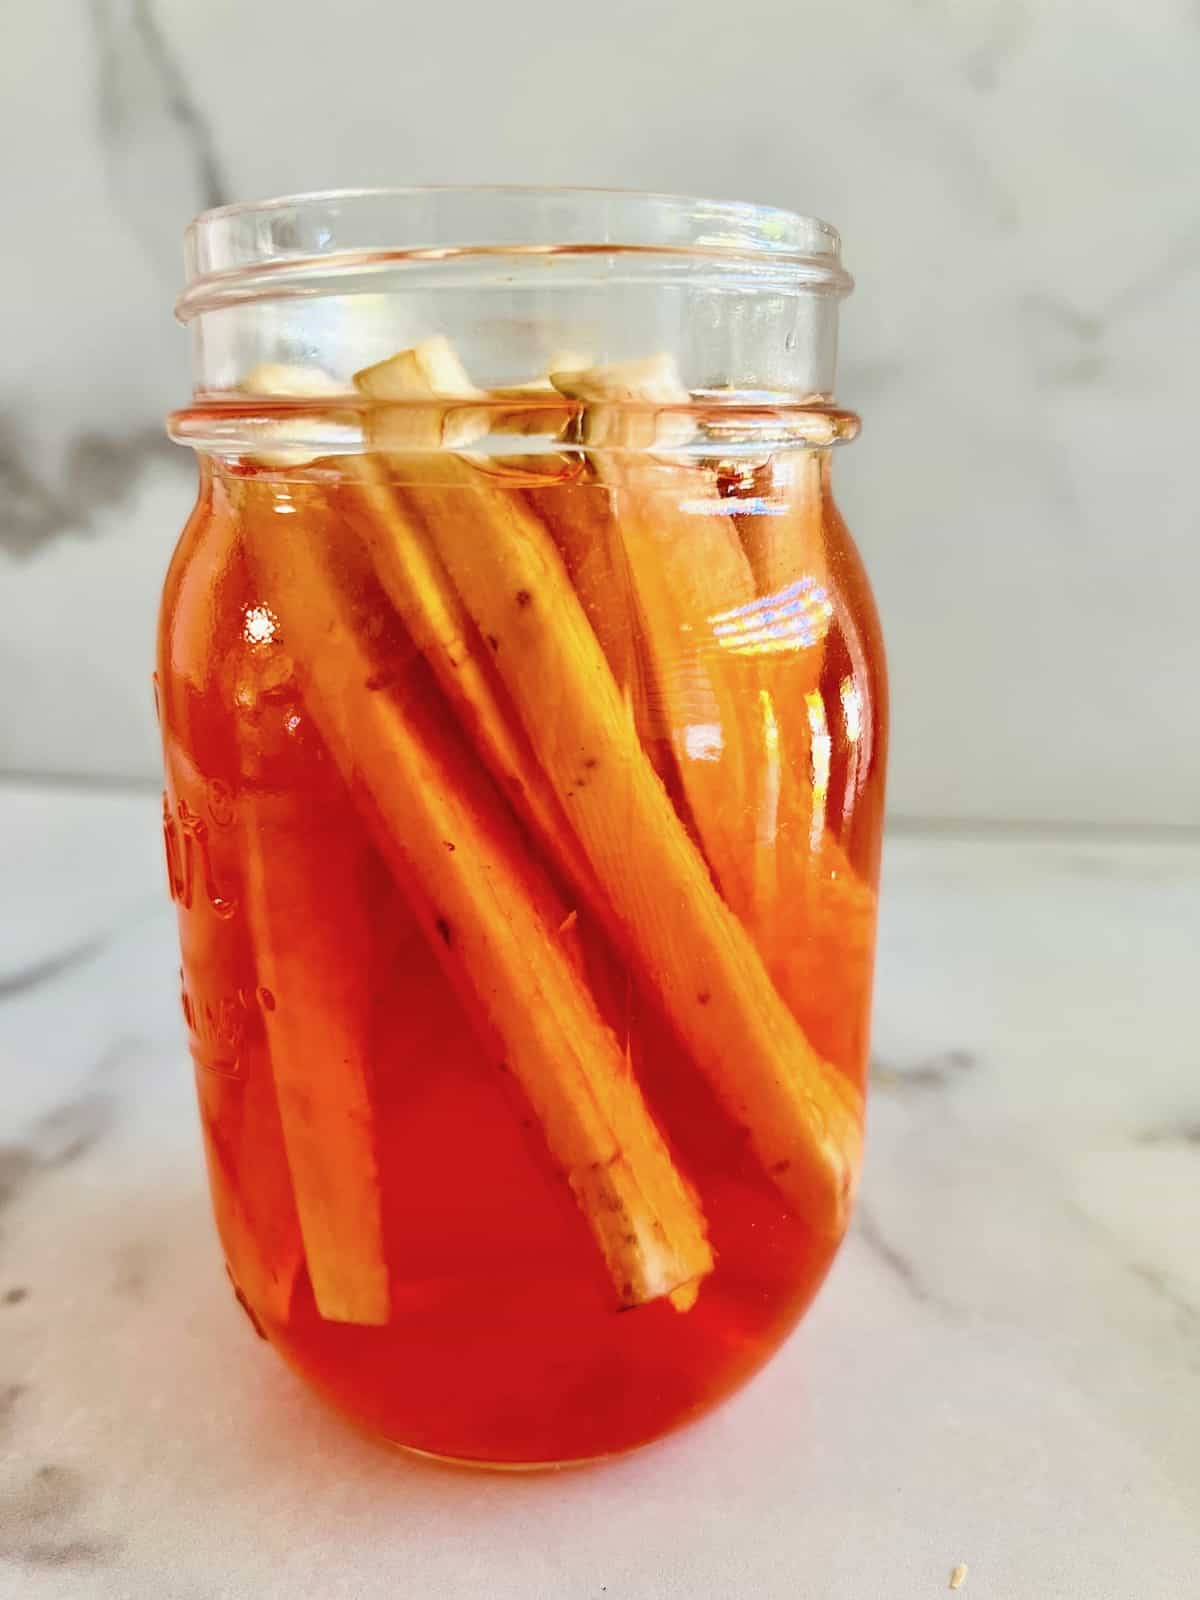 Burdock root and orange pickling liquid in the mason jar